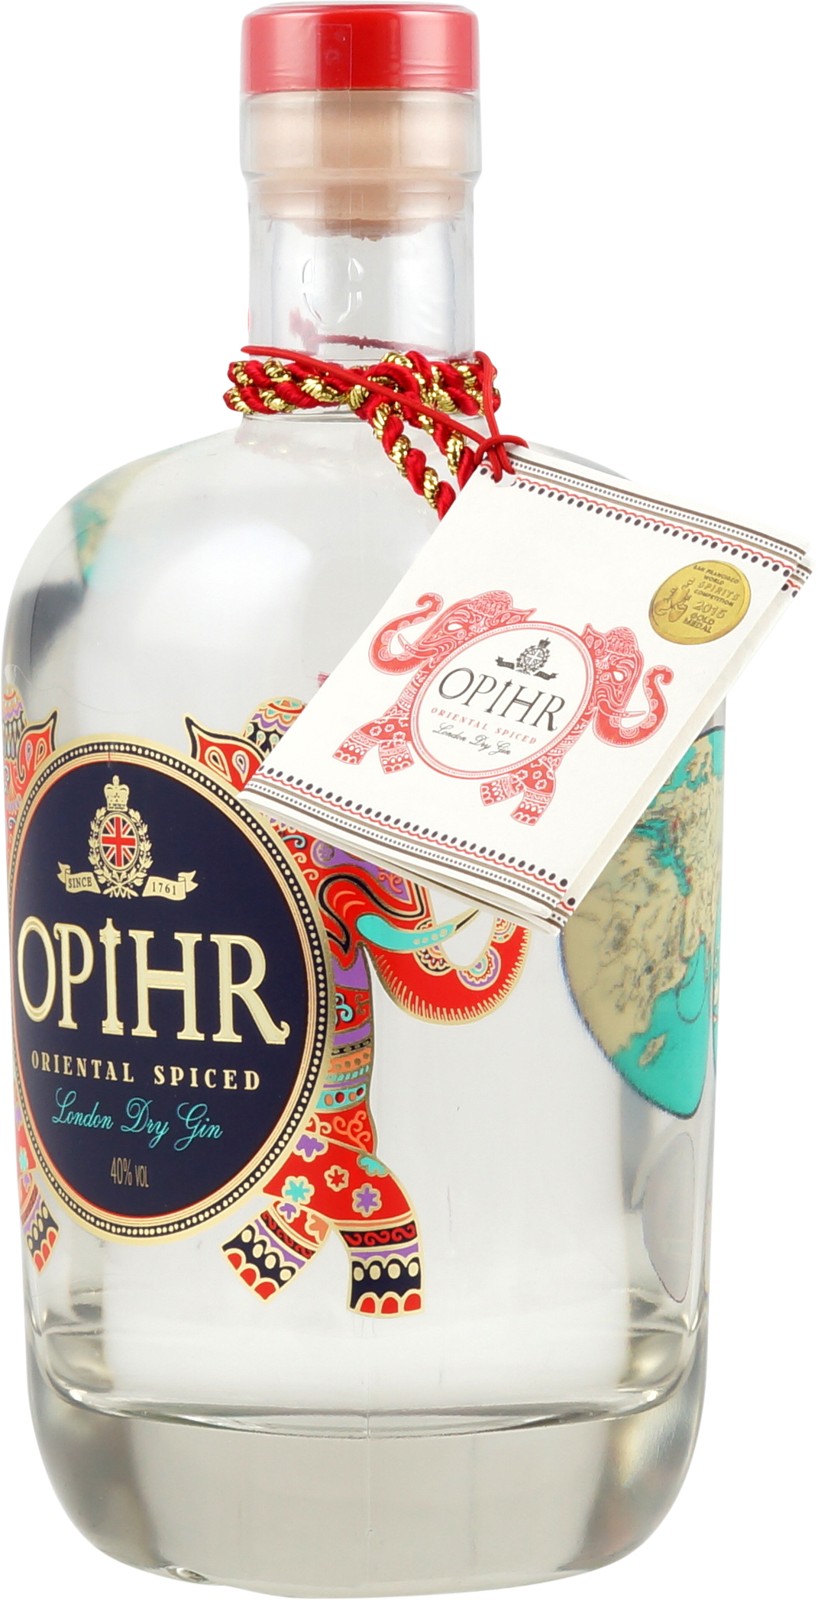 Opihr Oriental Spiced London Dry Gin im Shop